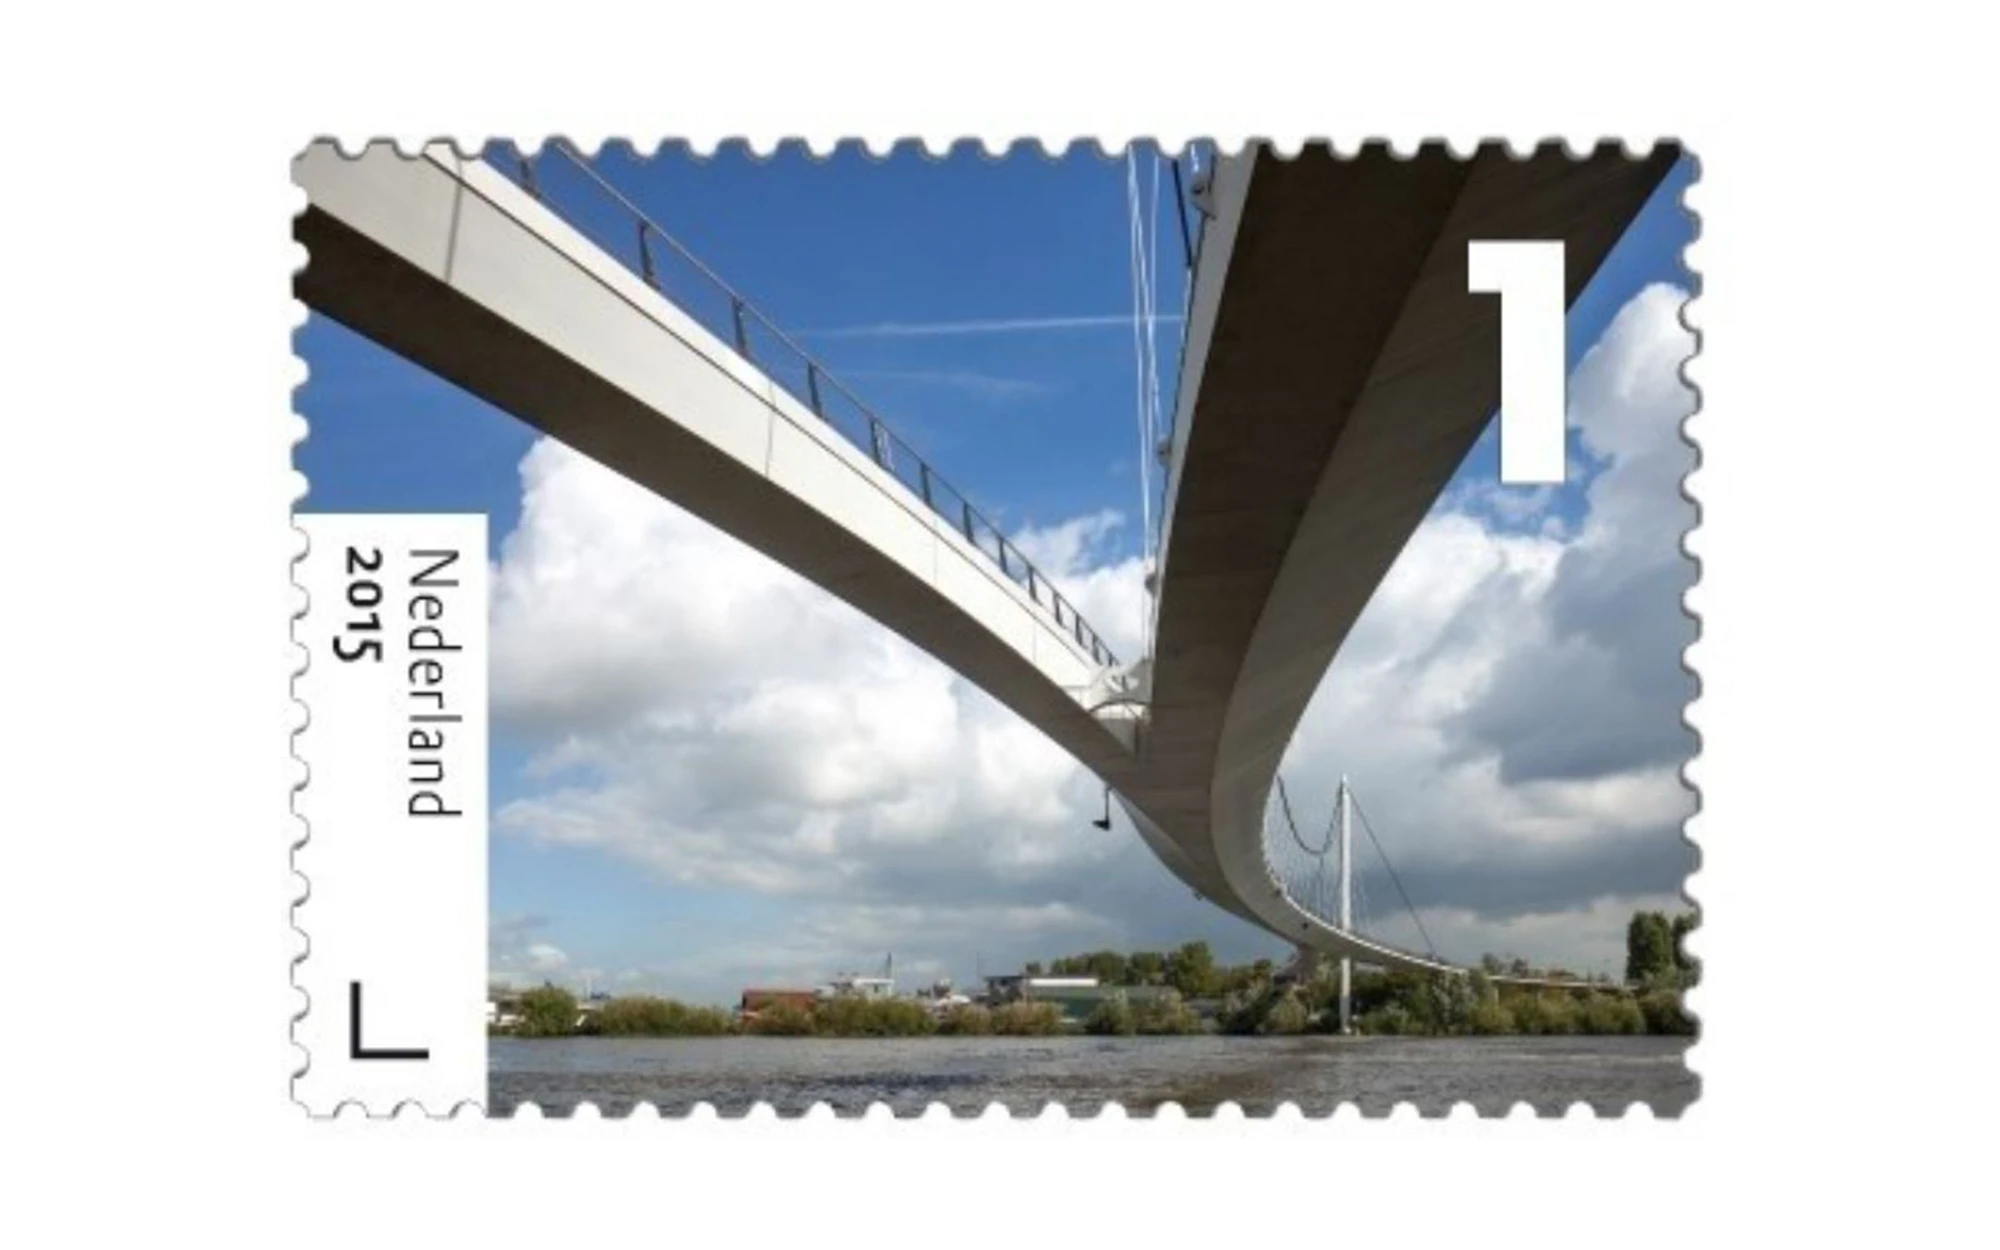 Nesciobrug bridge featured on stamp